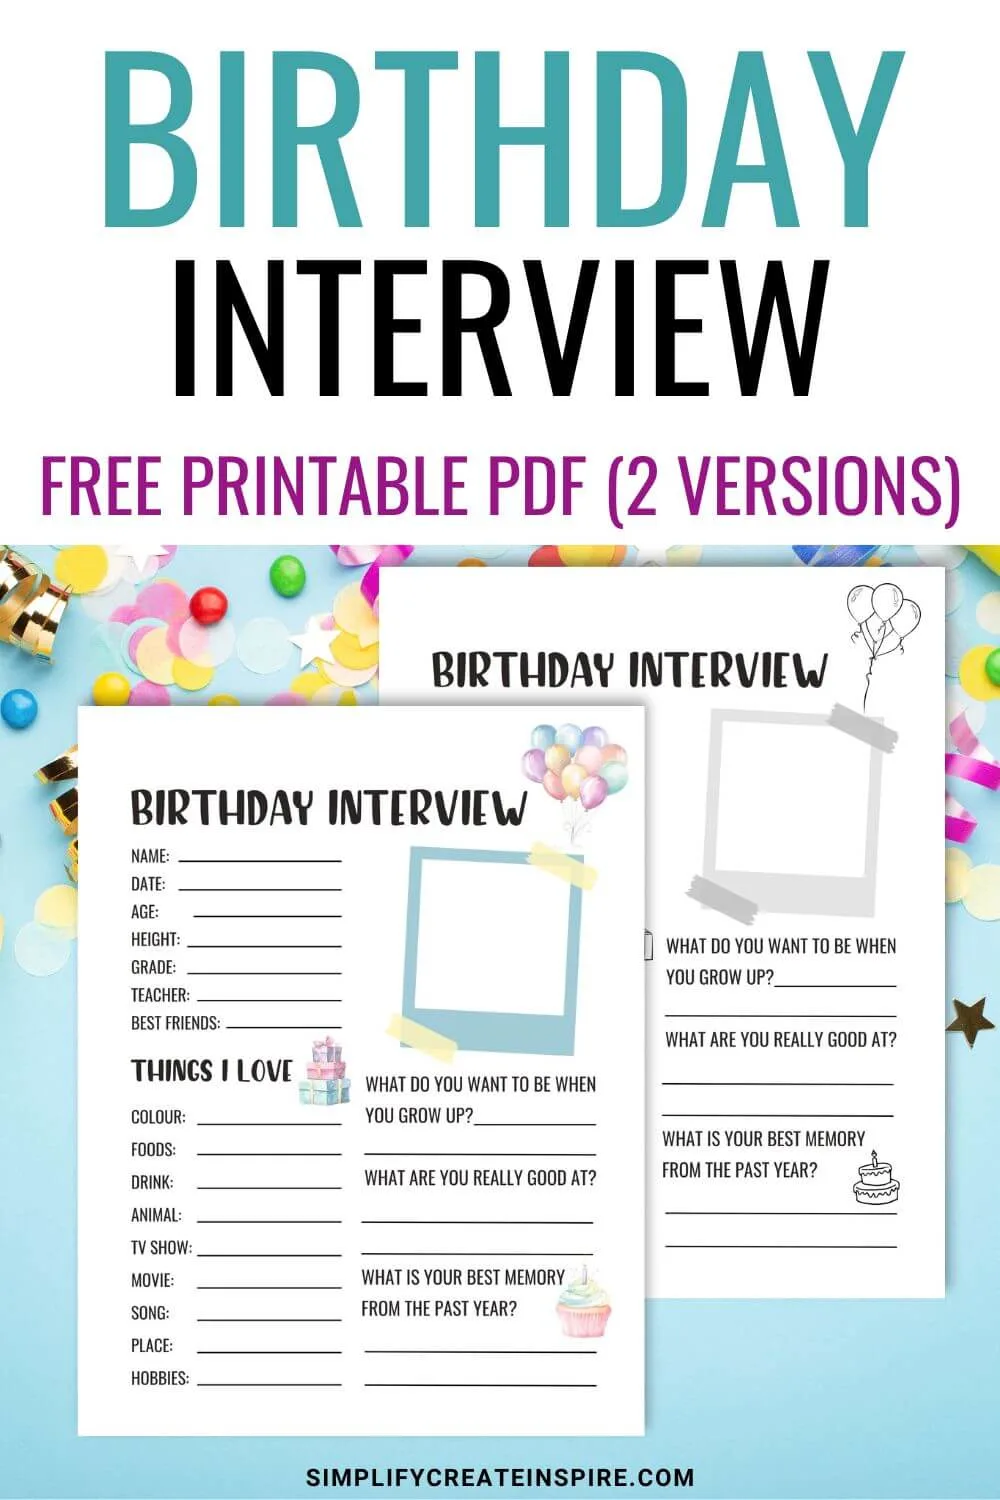 Birthday interview free printable pdf 2 versions.